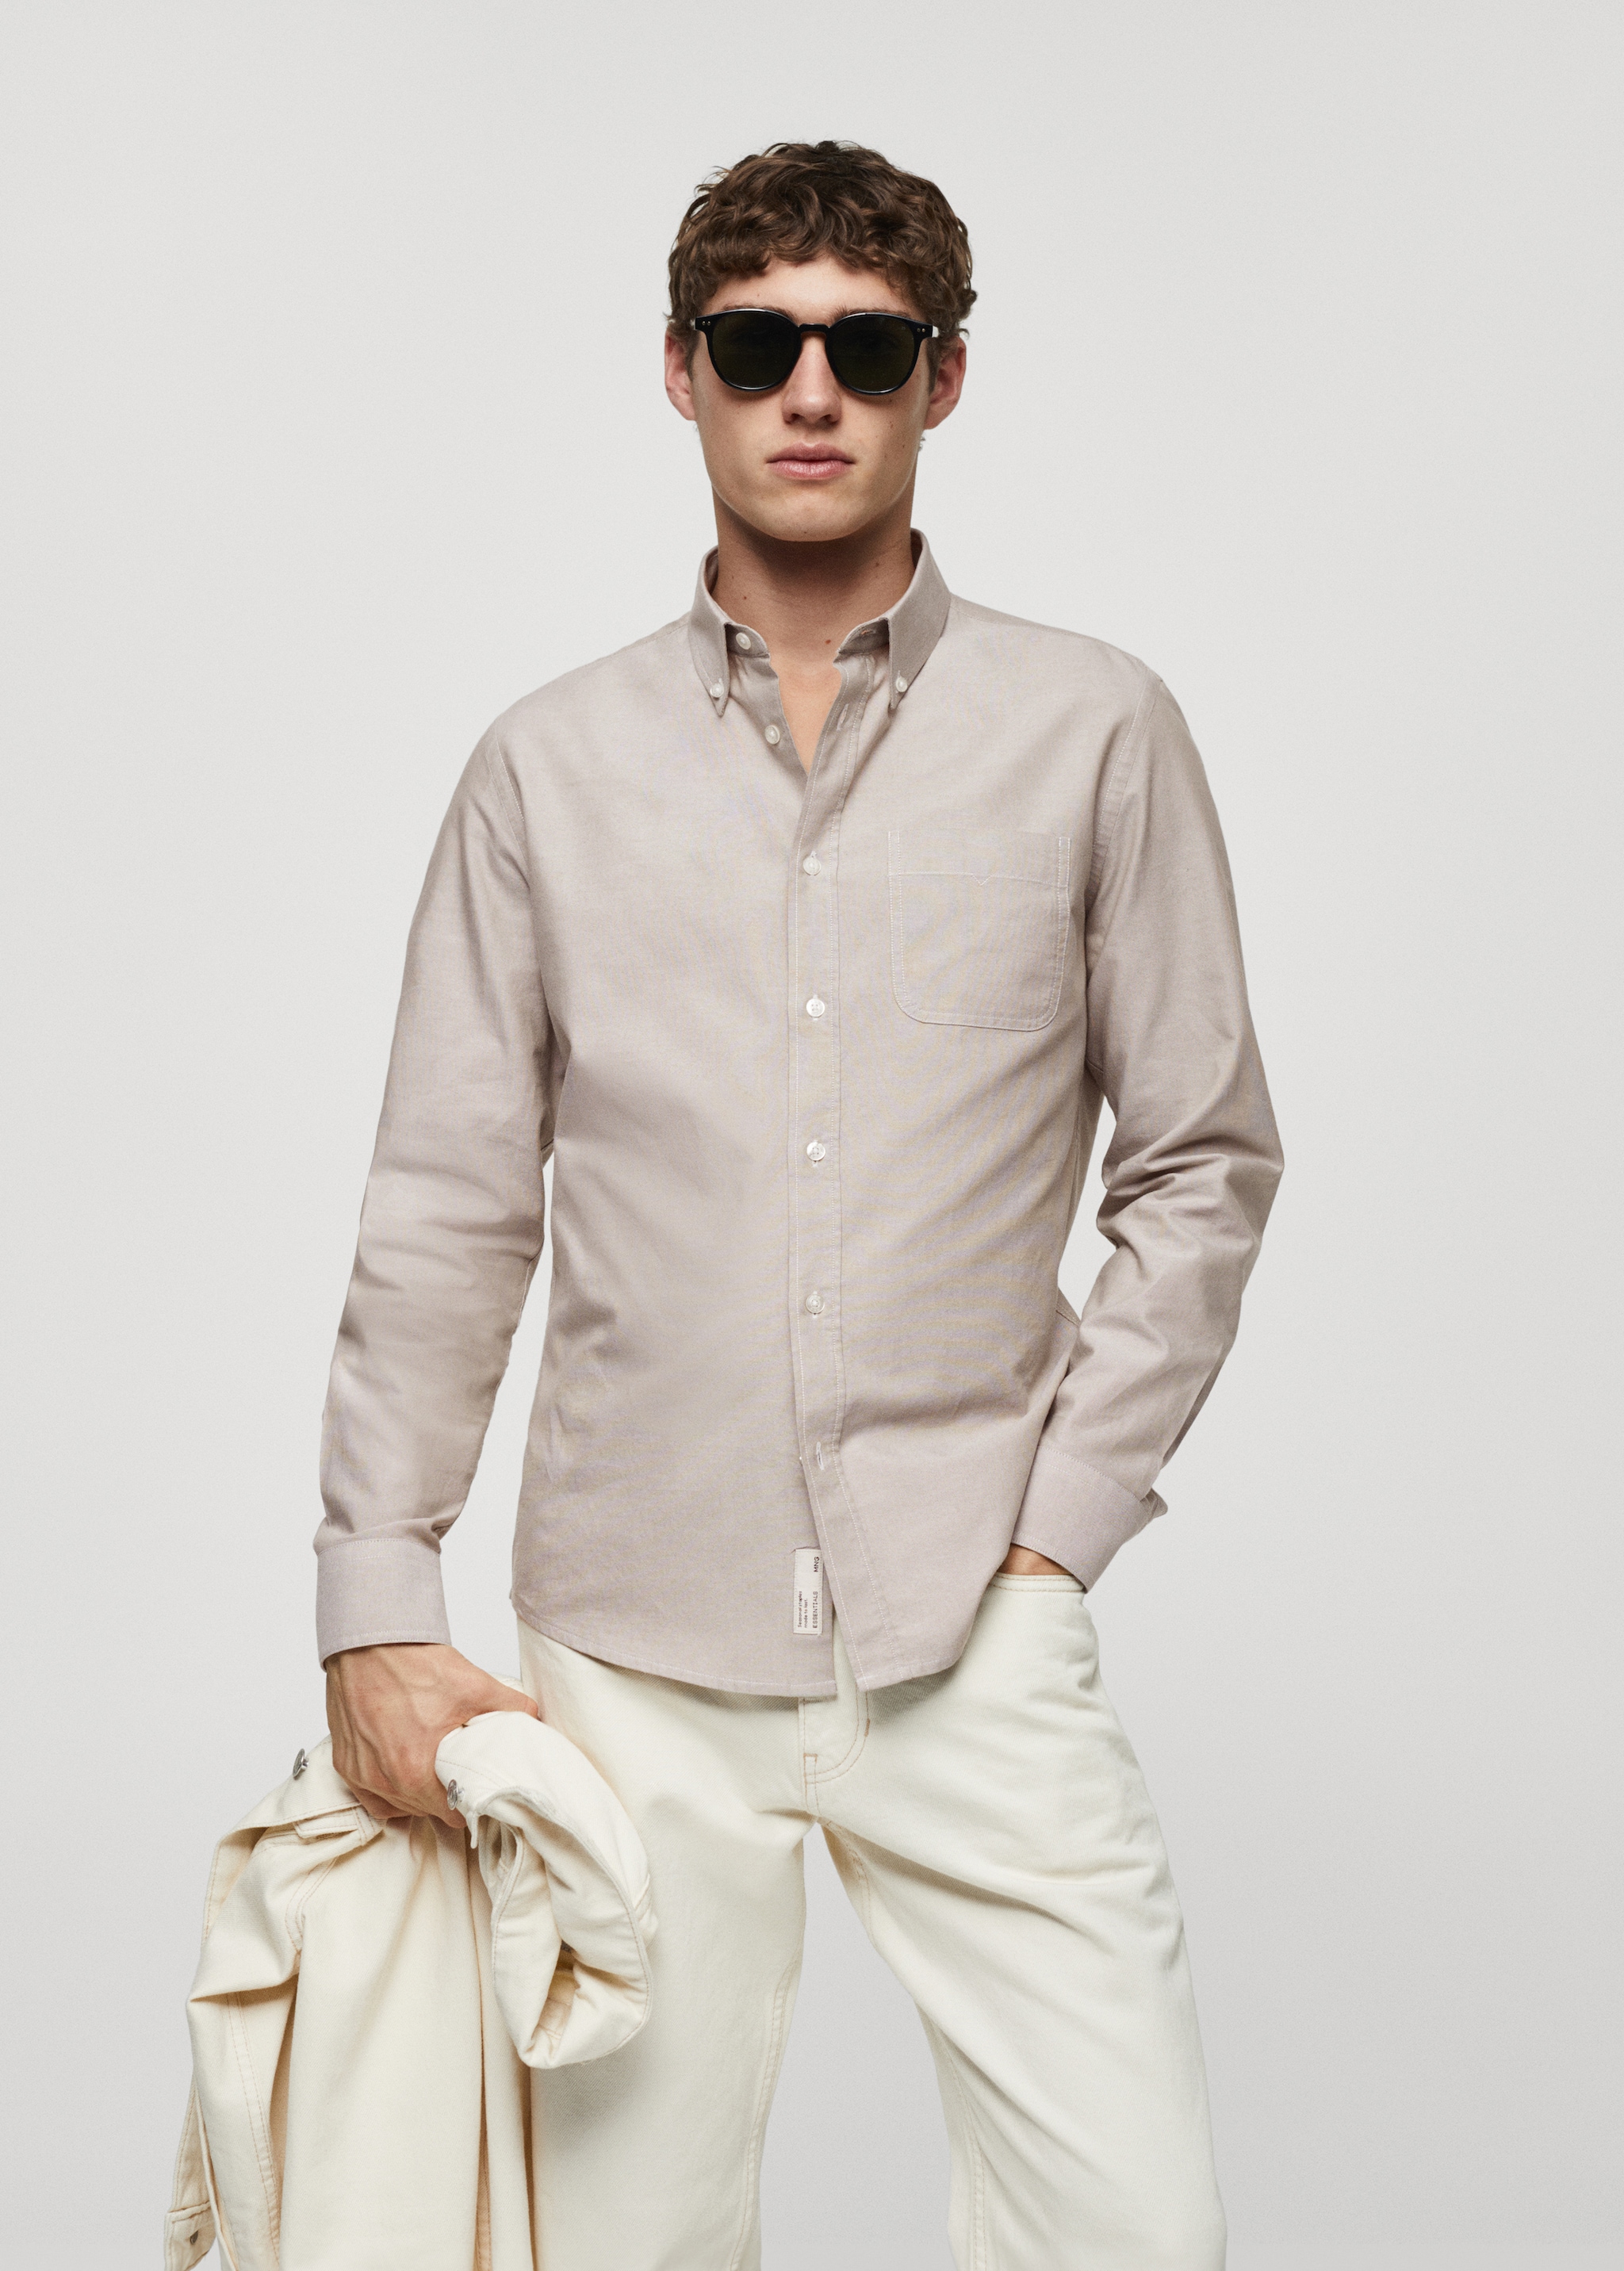 Regular fit Oxford cotton shirt - Medium plane